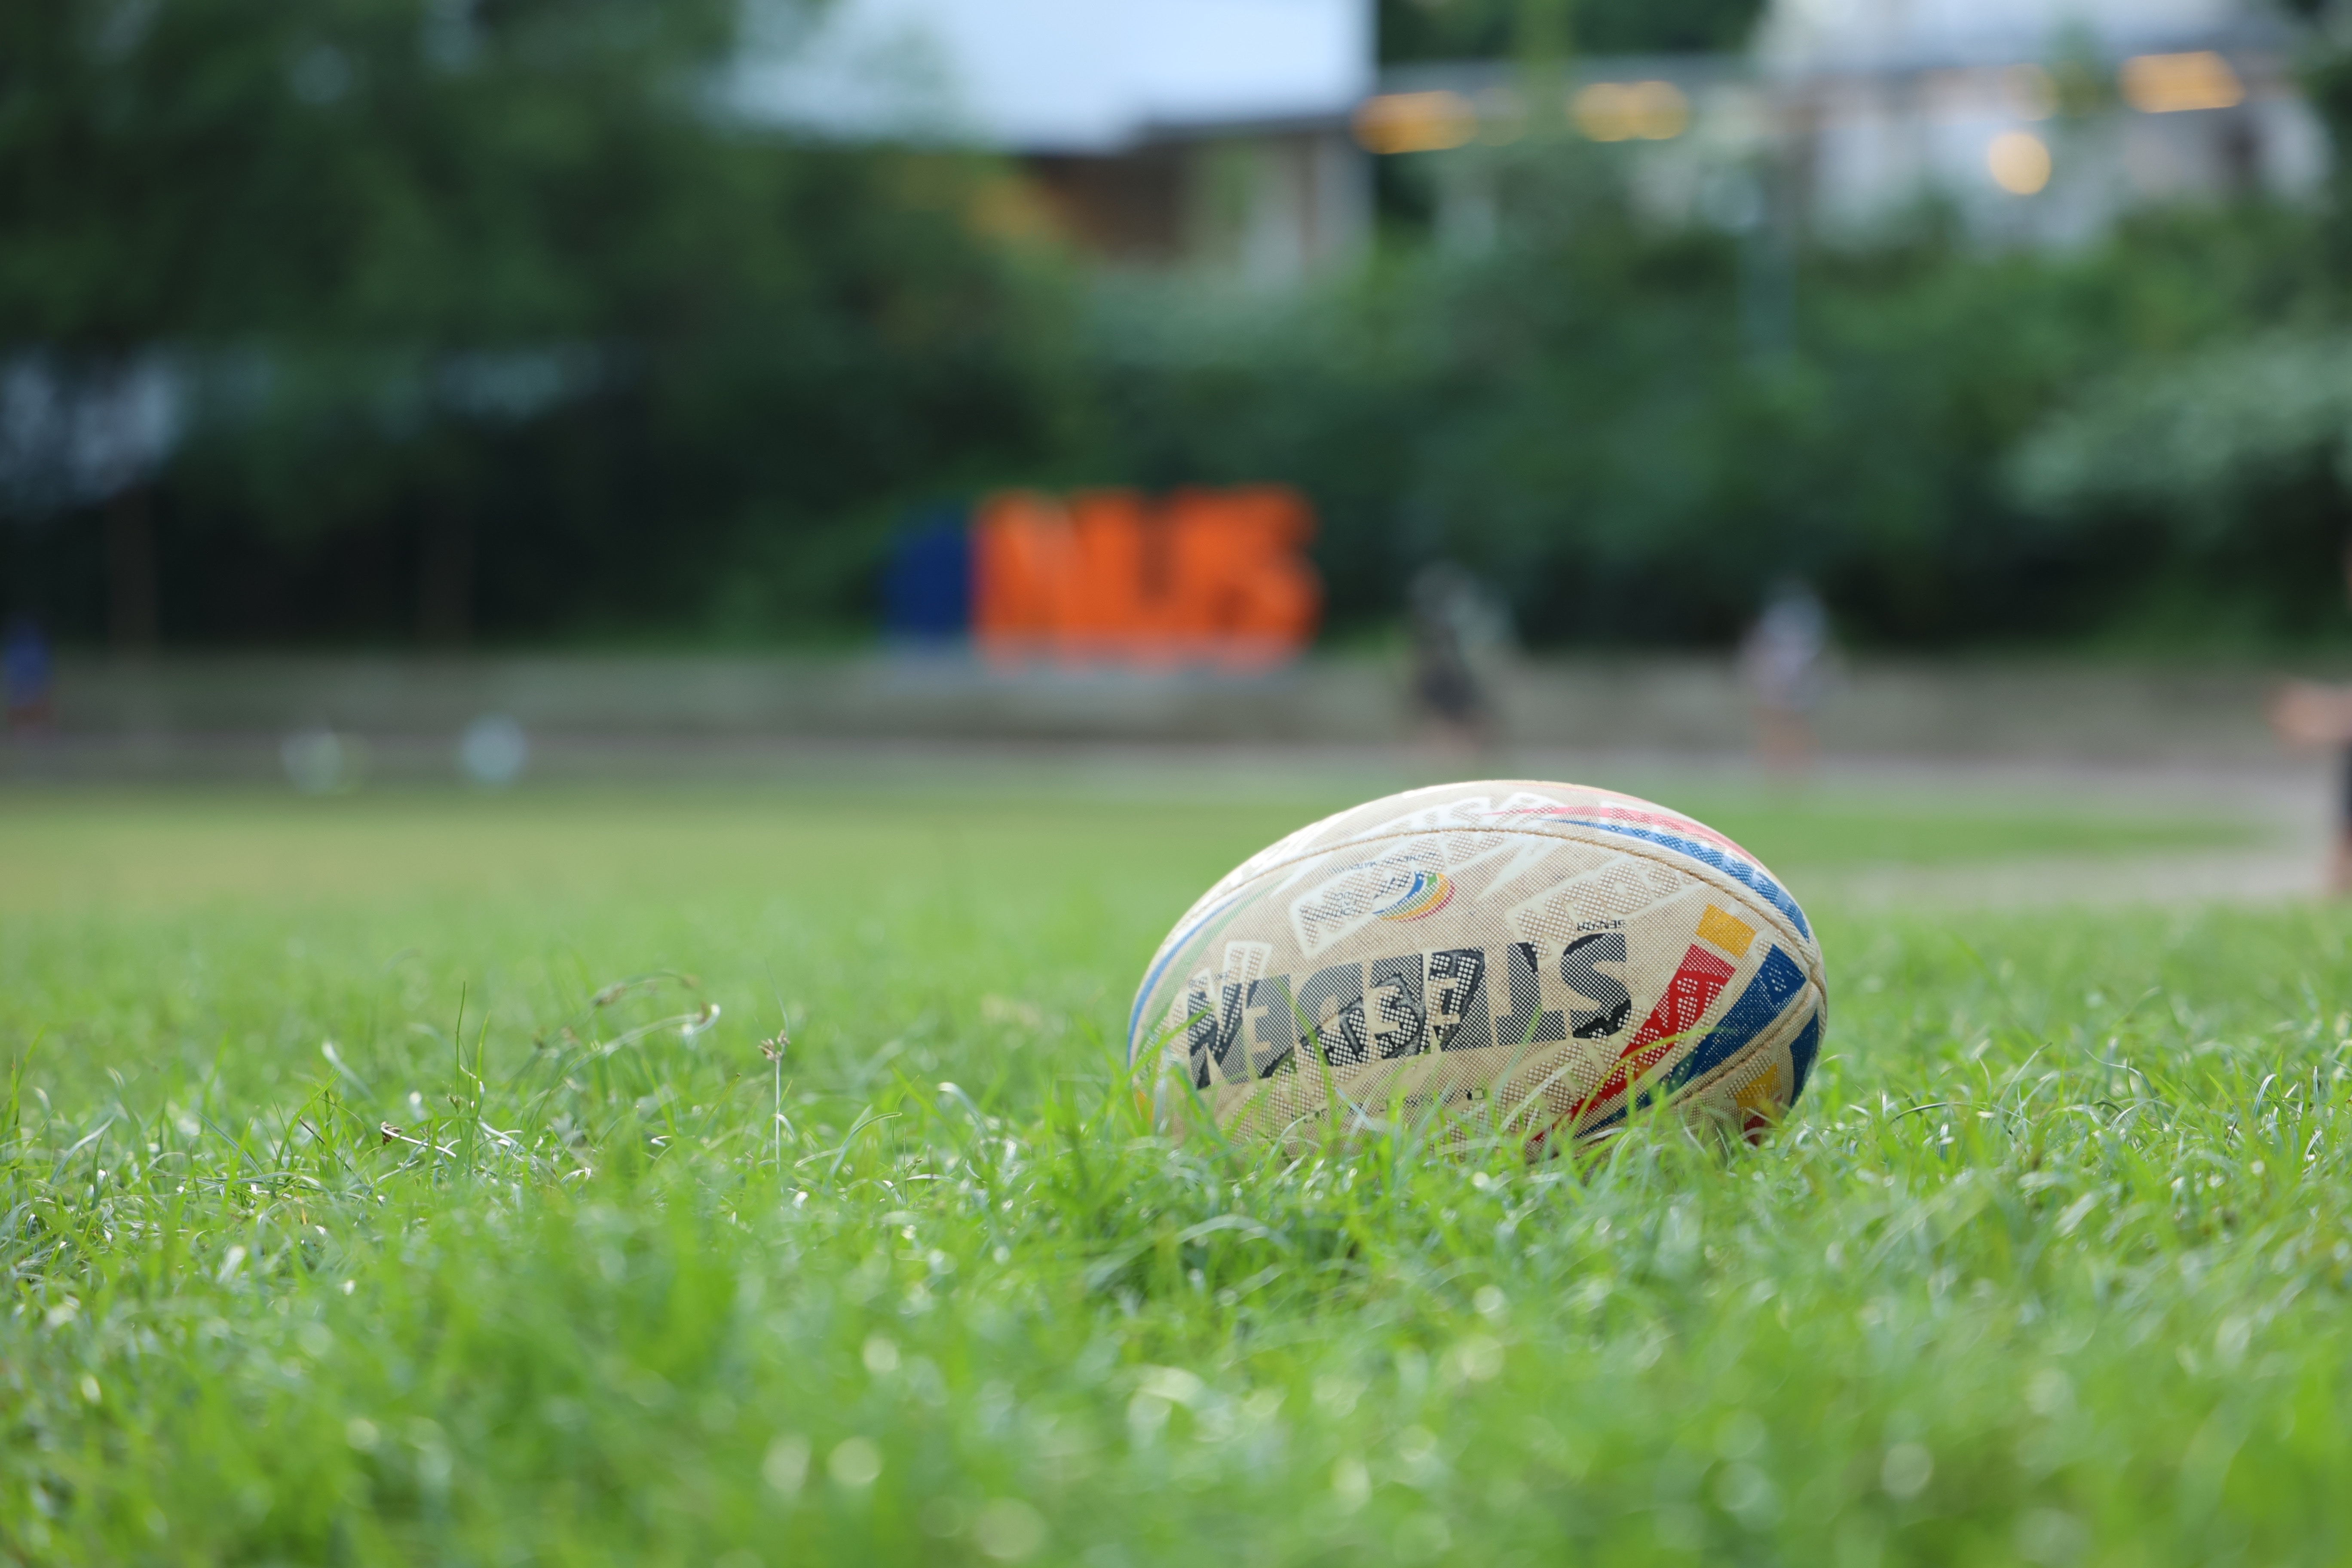 Rugby ball | Jiachen Lin on Unsplash